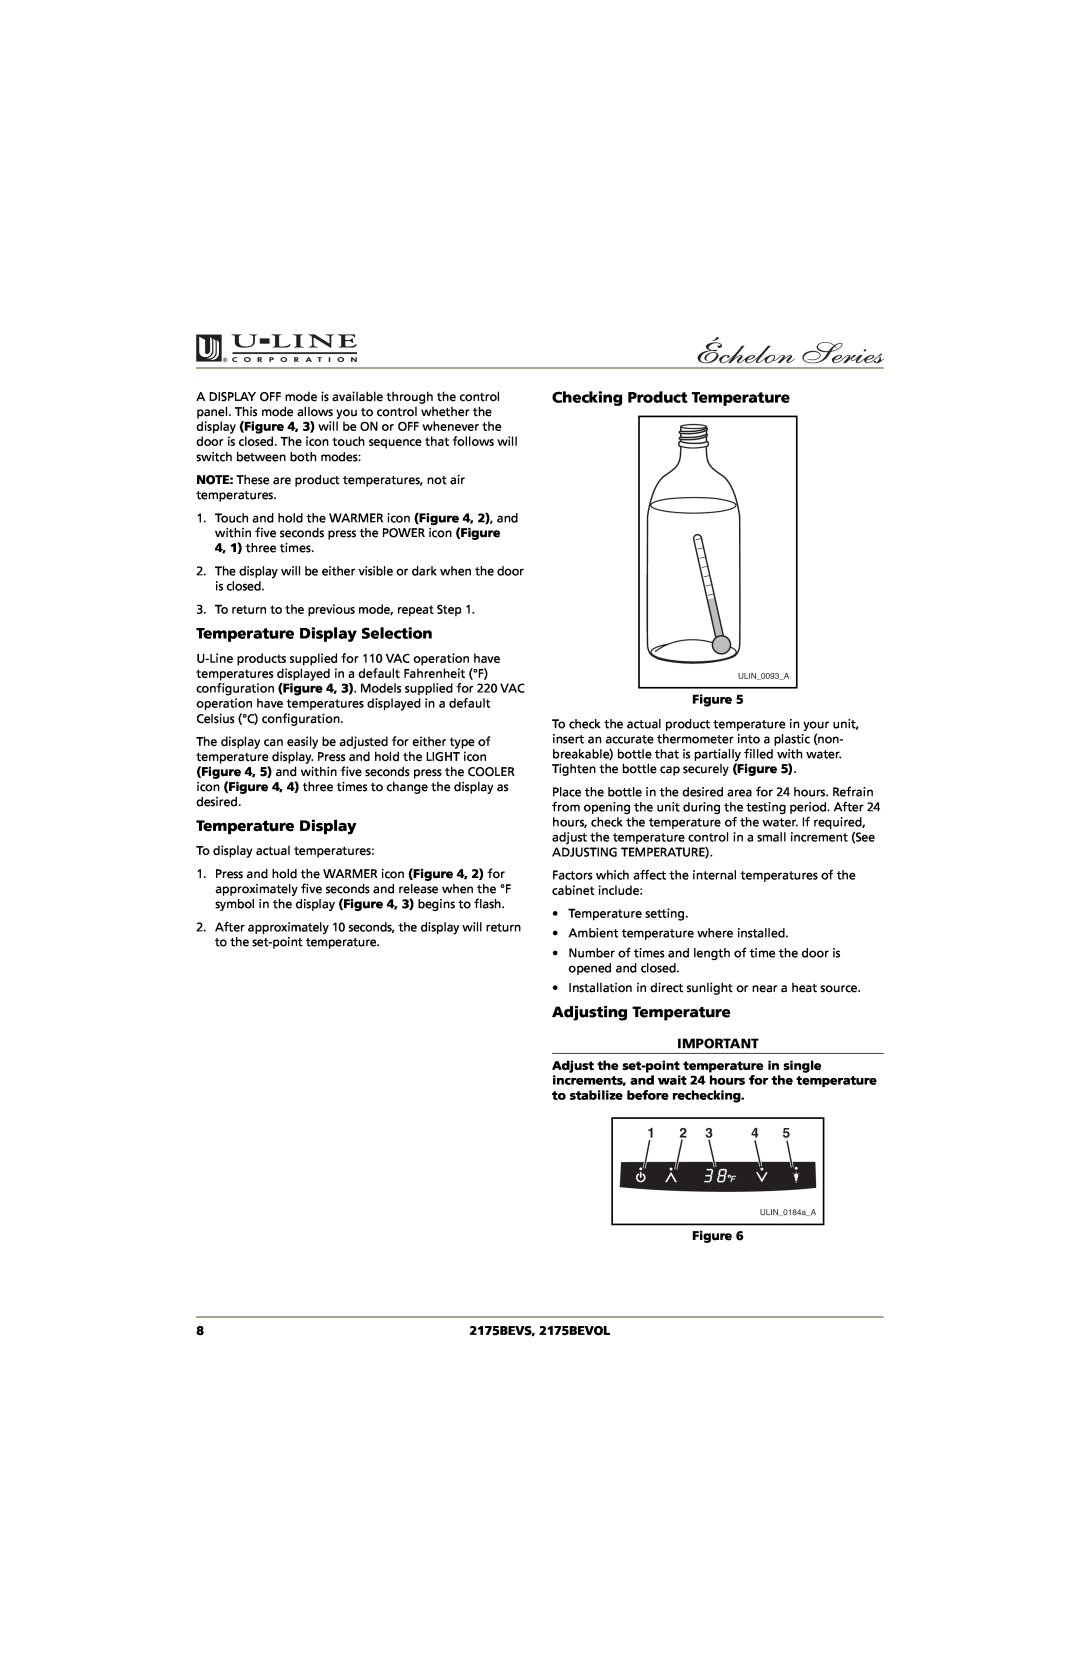 U-Line manual Temperature Display Selection, Checking Product Temperature, Adjusting Temperature, 2175BEVS, 2175BEVOL 